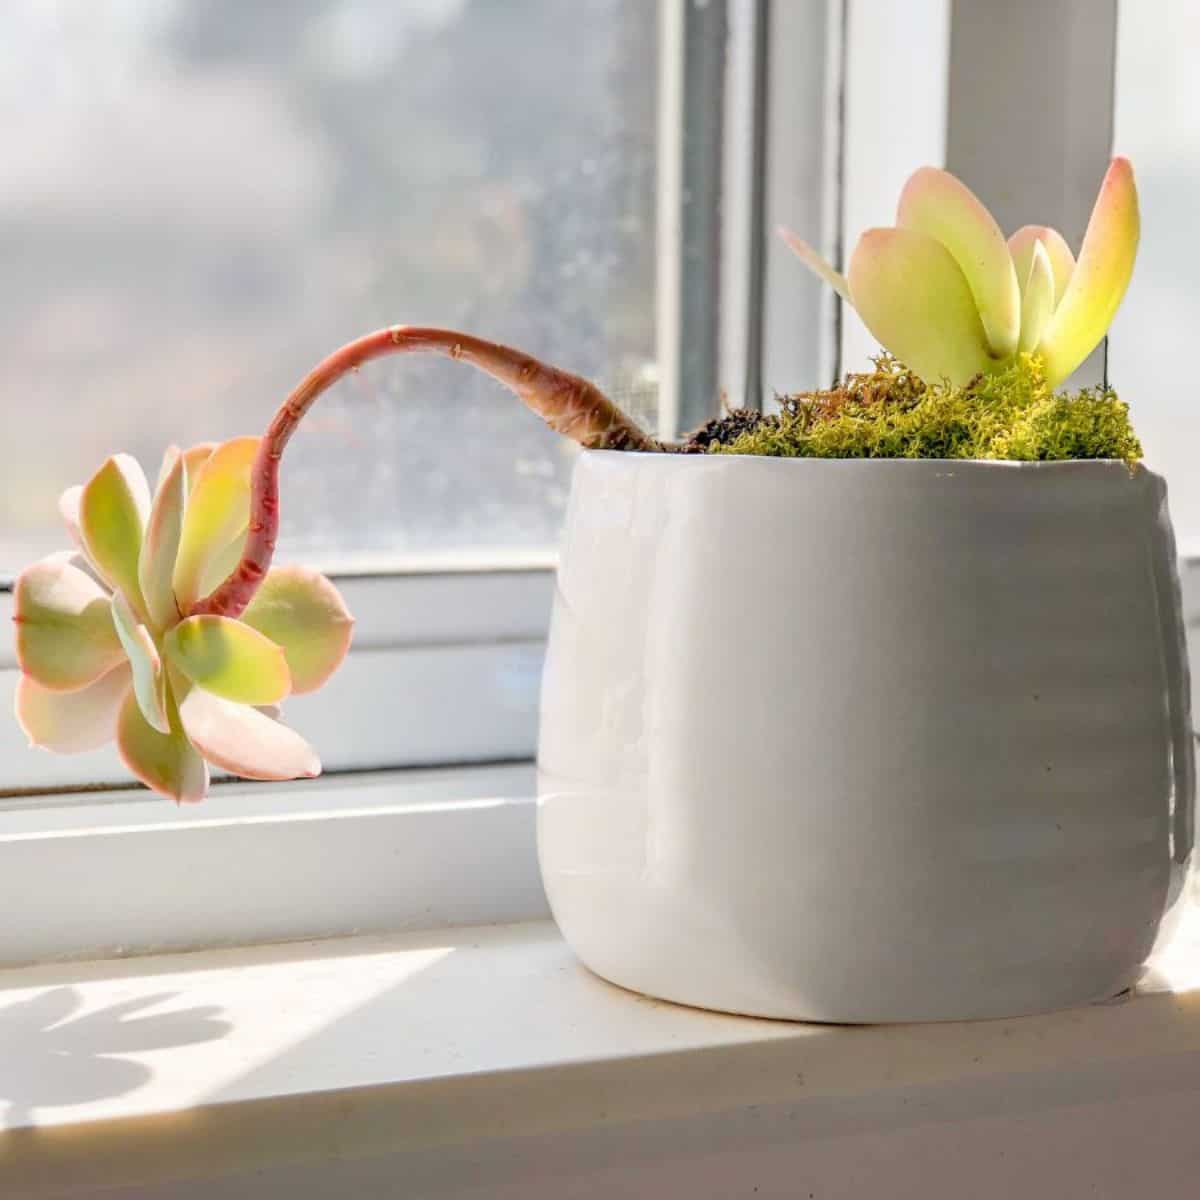 Succulent in a poot near a window.